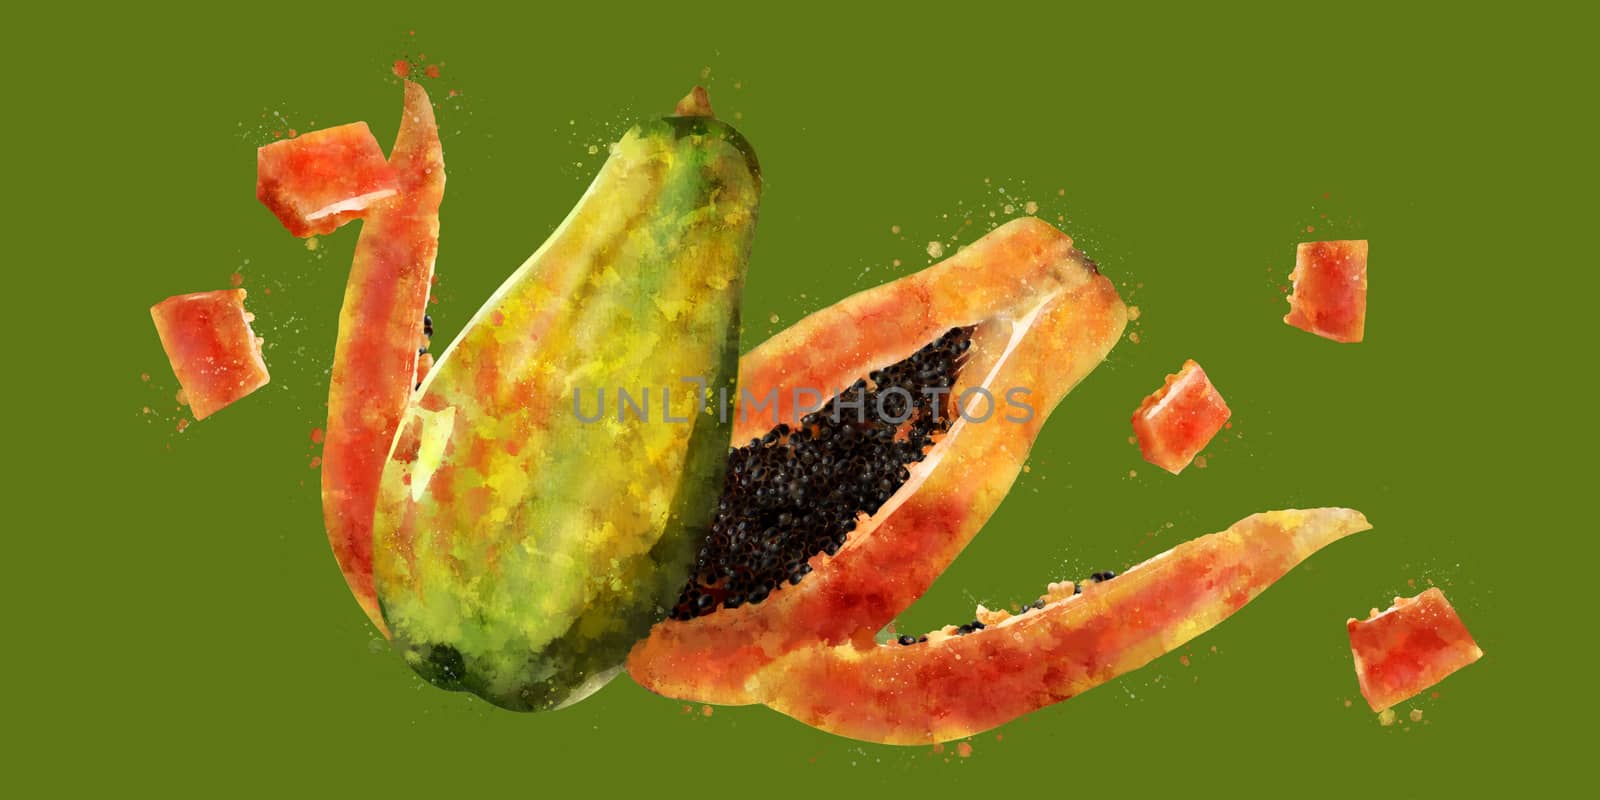 Papaya, hand-painted illustration on green background